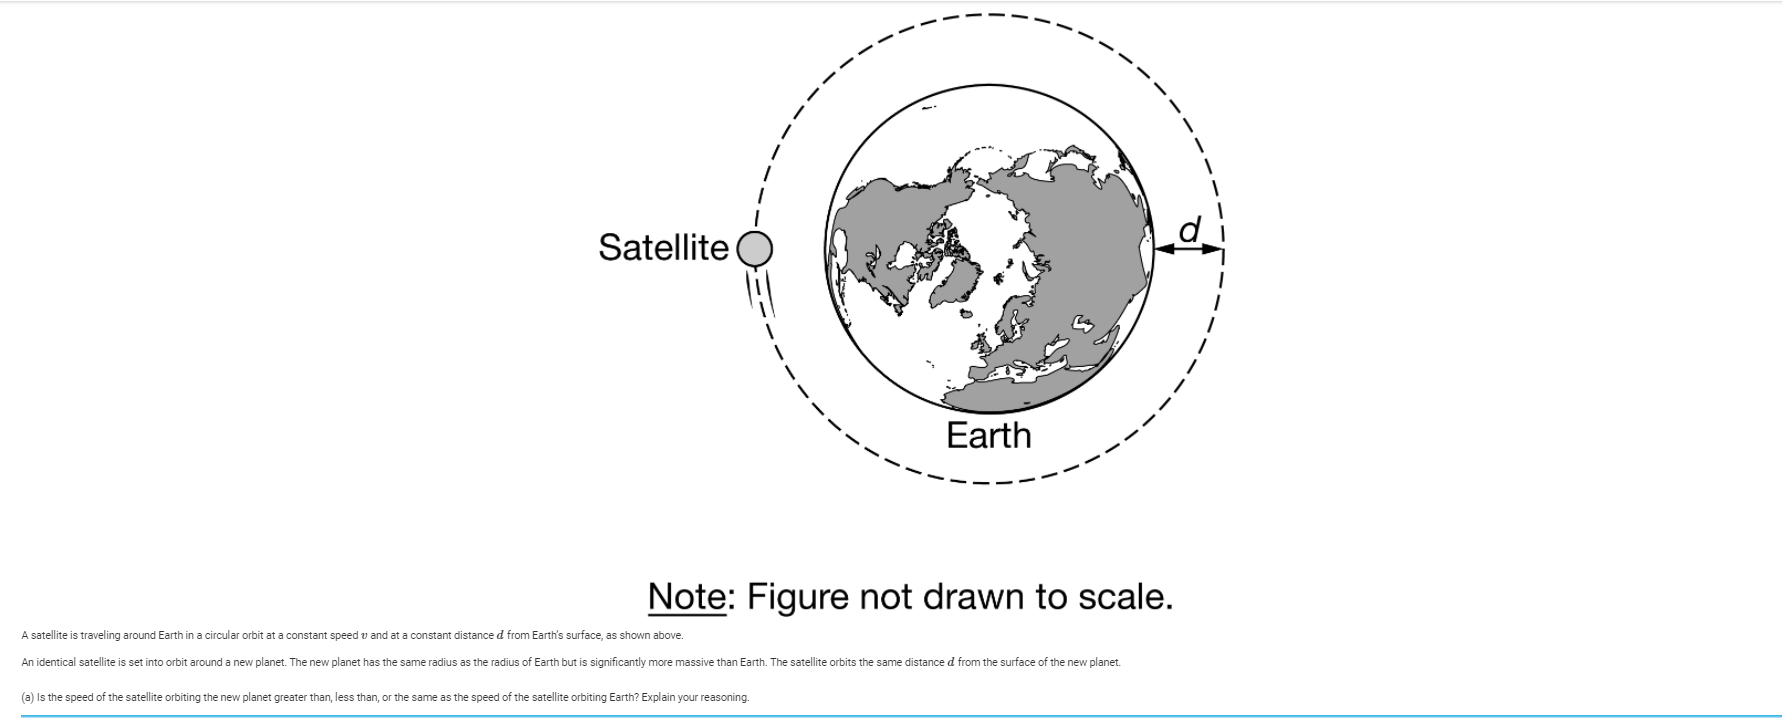 satellite orbits around earth